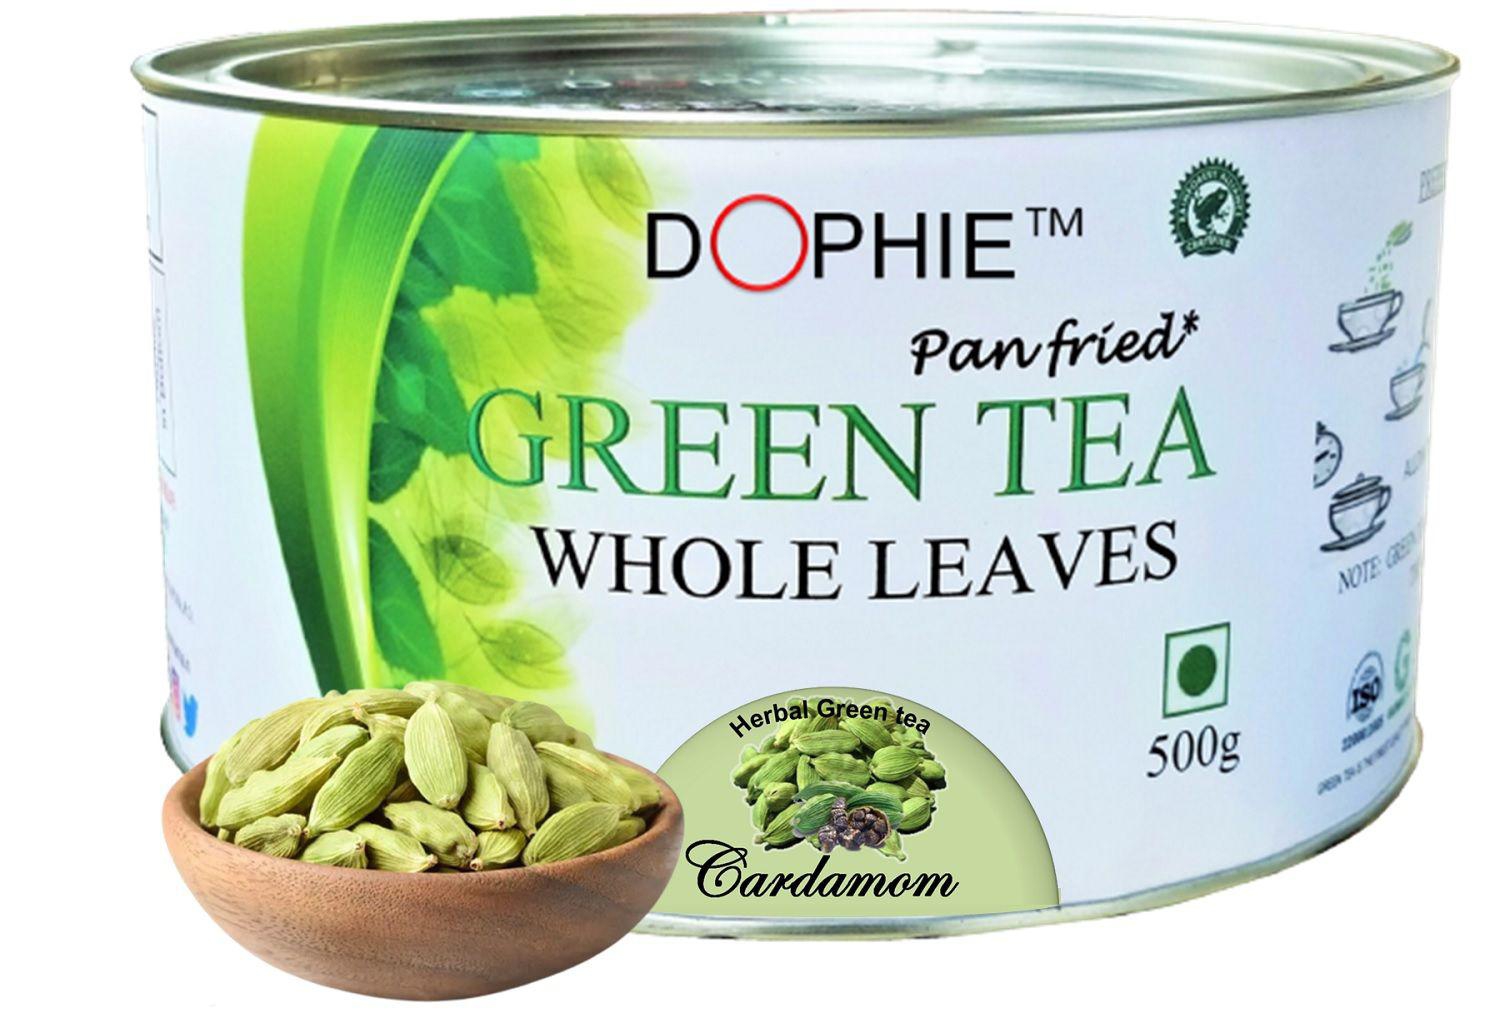 Dophie Cardamom Green tea  Whole leaves 500g